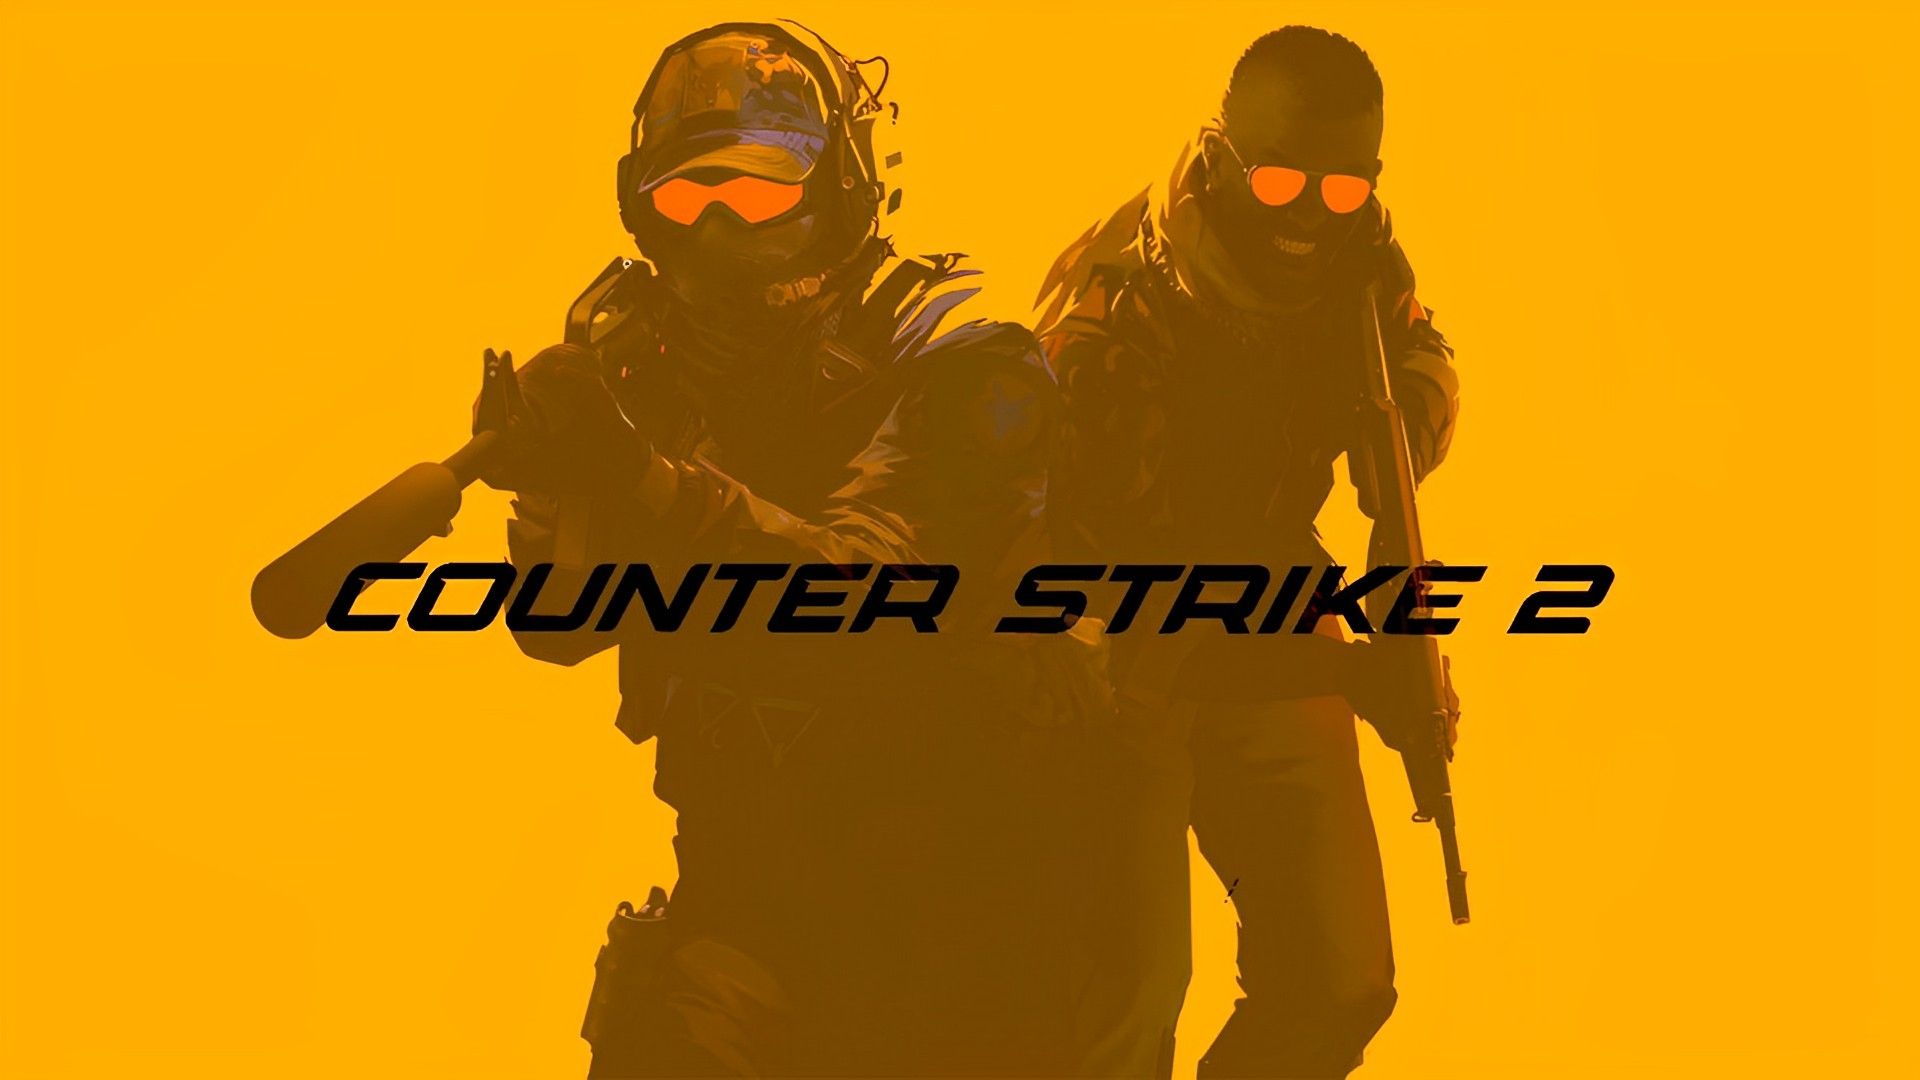 Valve официально представила Counter-Strike 2, о котором давно ходят слухи